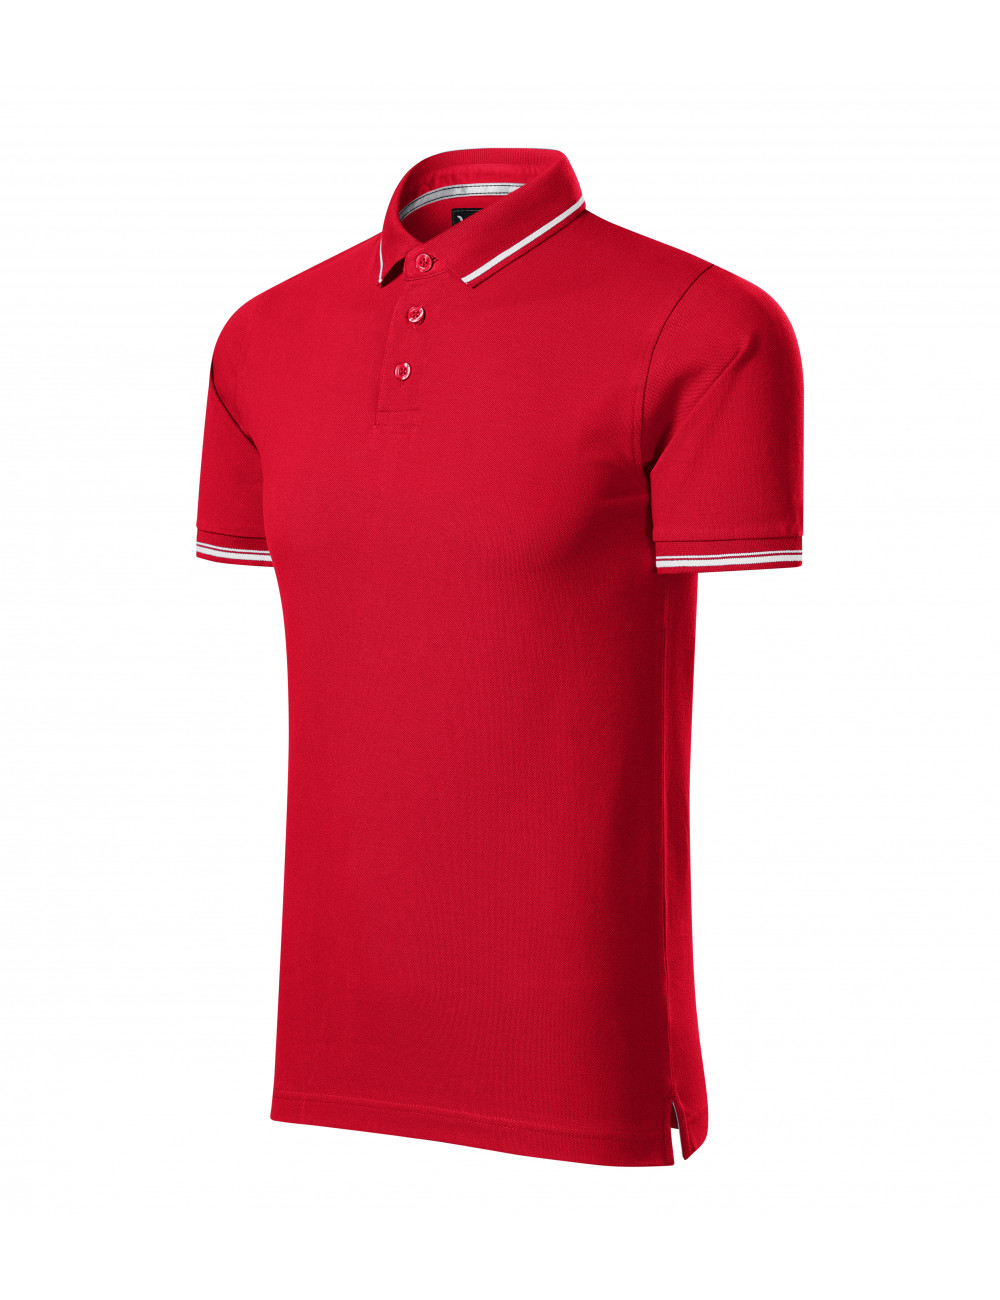 Perfection plain 251 men`s polo shirt formula red Adler Malfinipremium